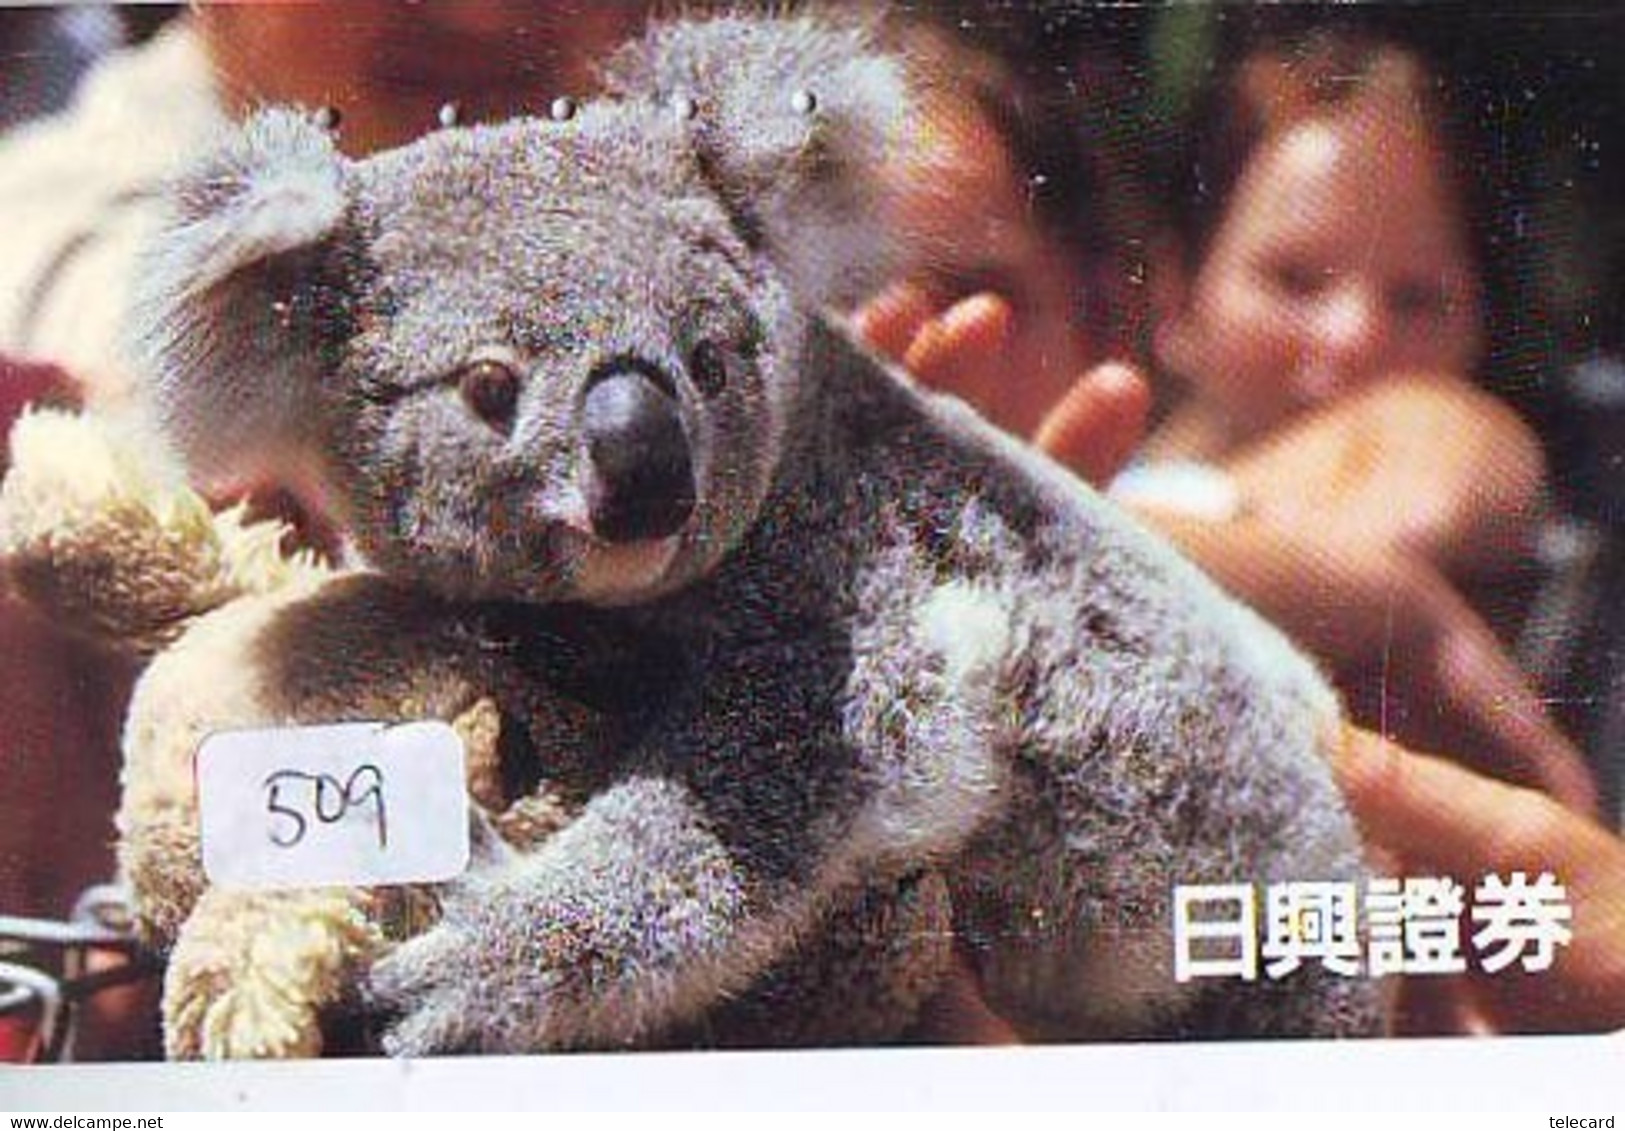 Telecarte Japon * KOALA * BEAR * Koalabär (509) * PHONECARD JAPAN ANIMAL * TIER TELEFONKARTE - Selva